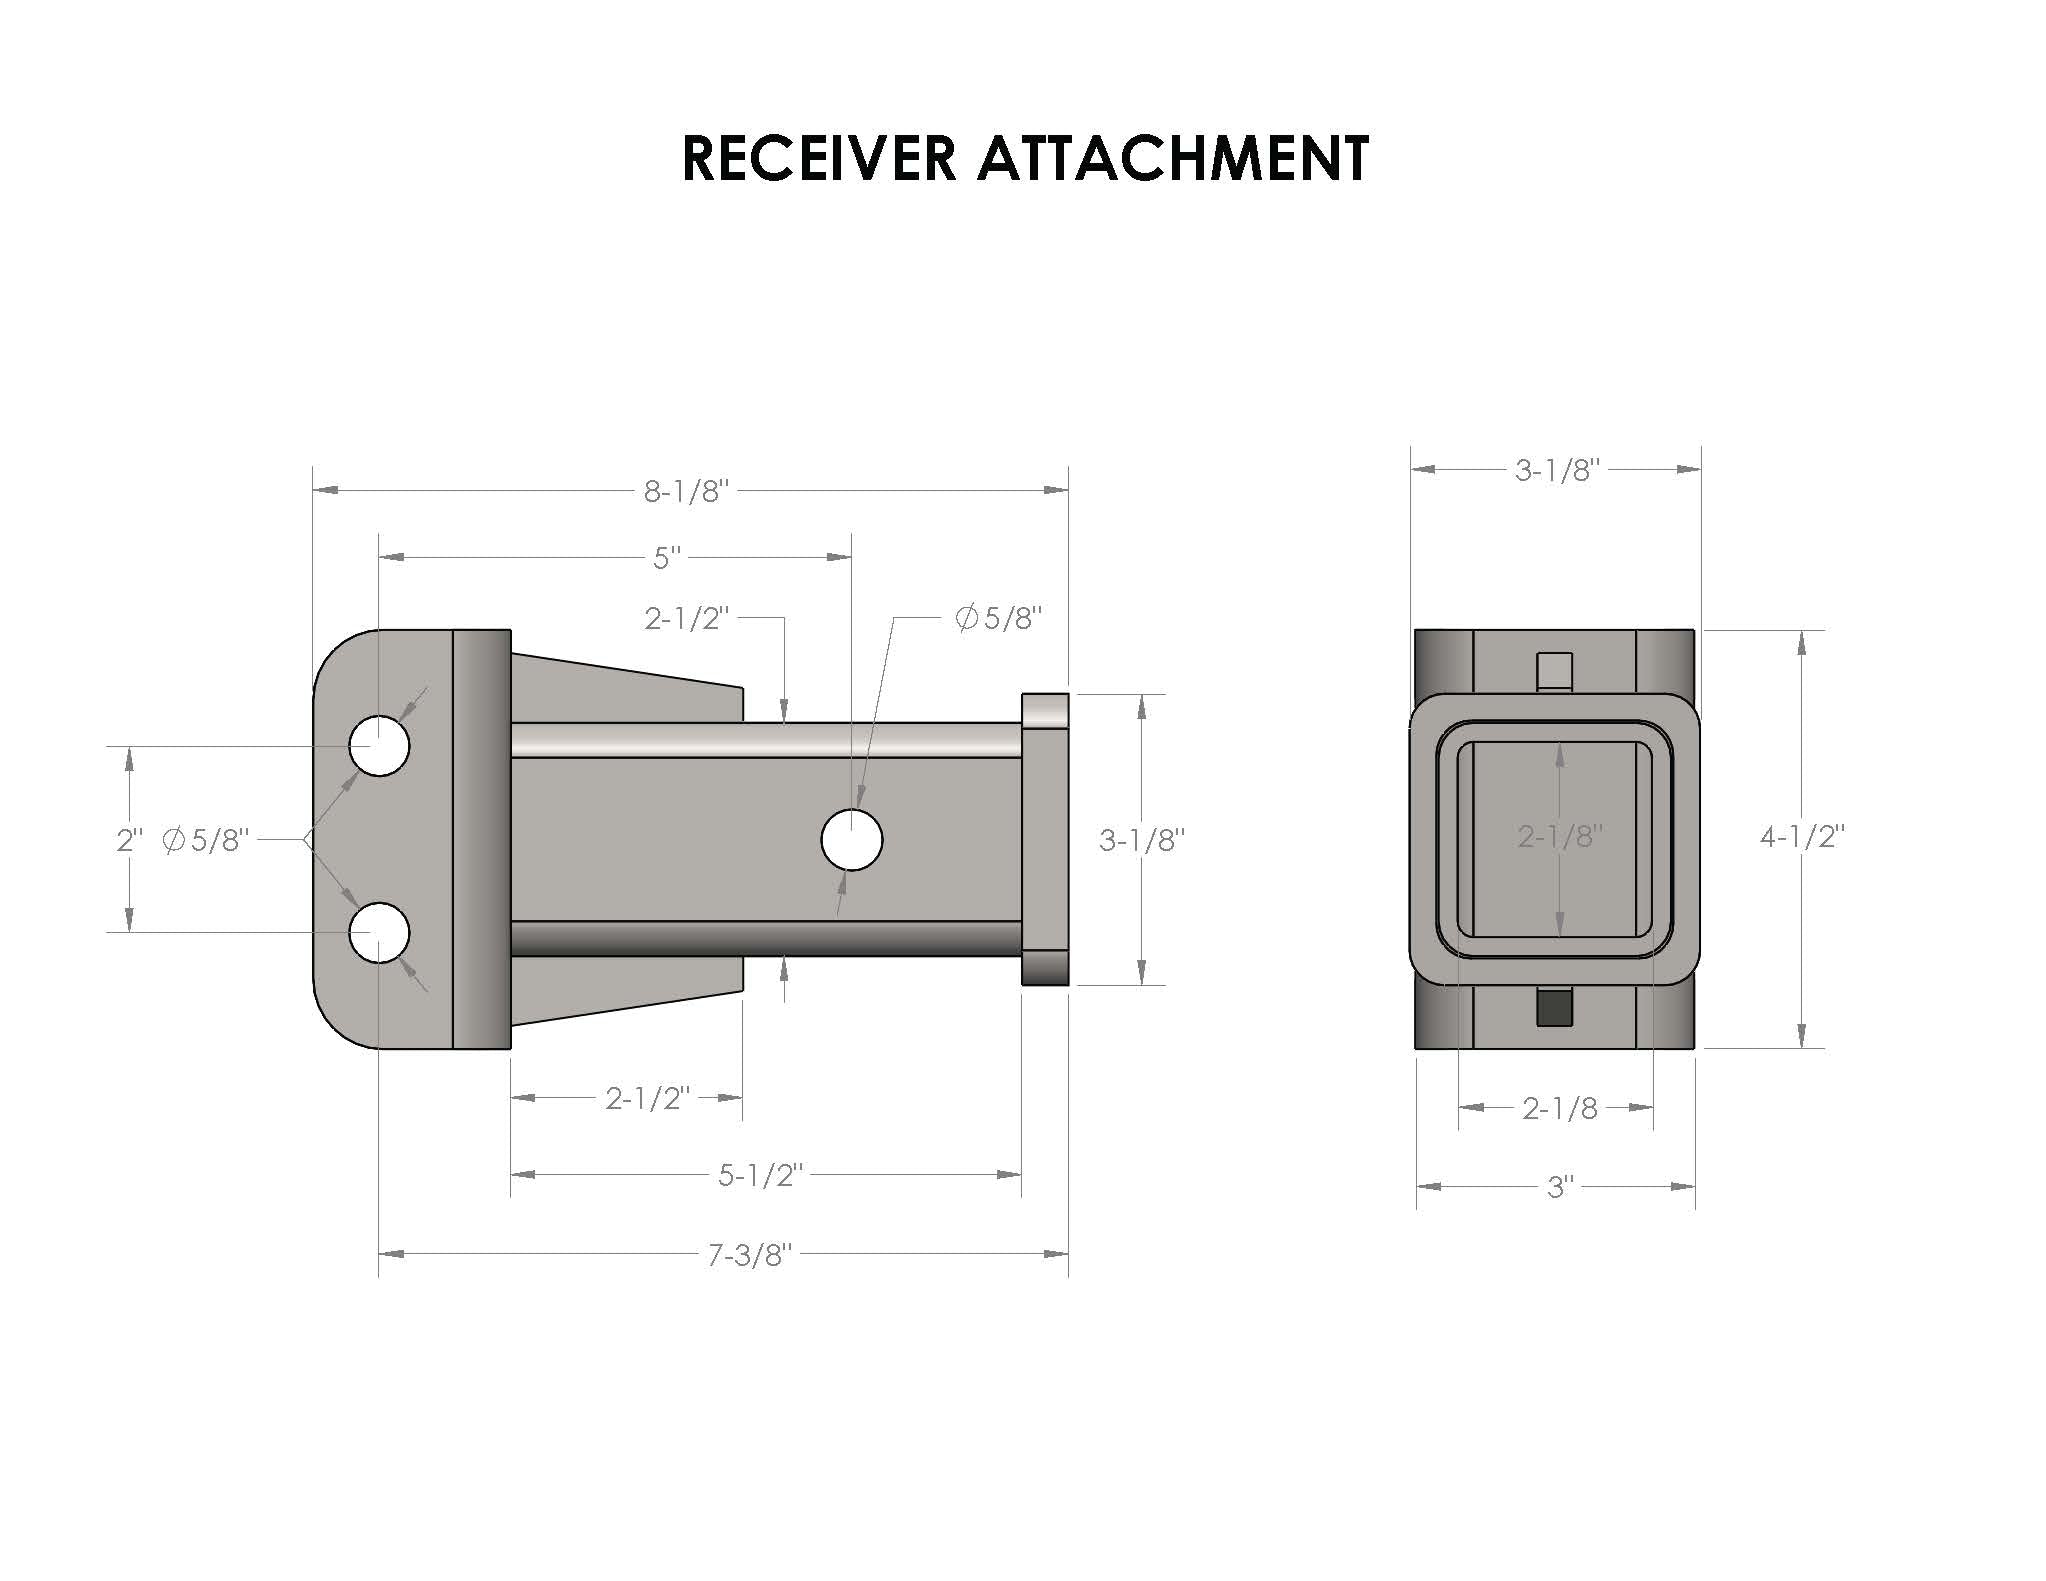 BulletProof 2" Receiver Attachment Design Specification